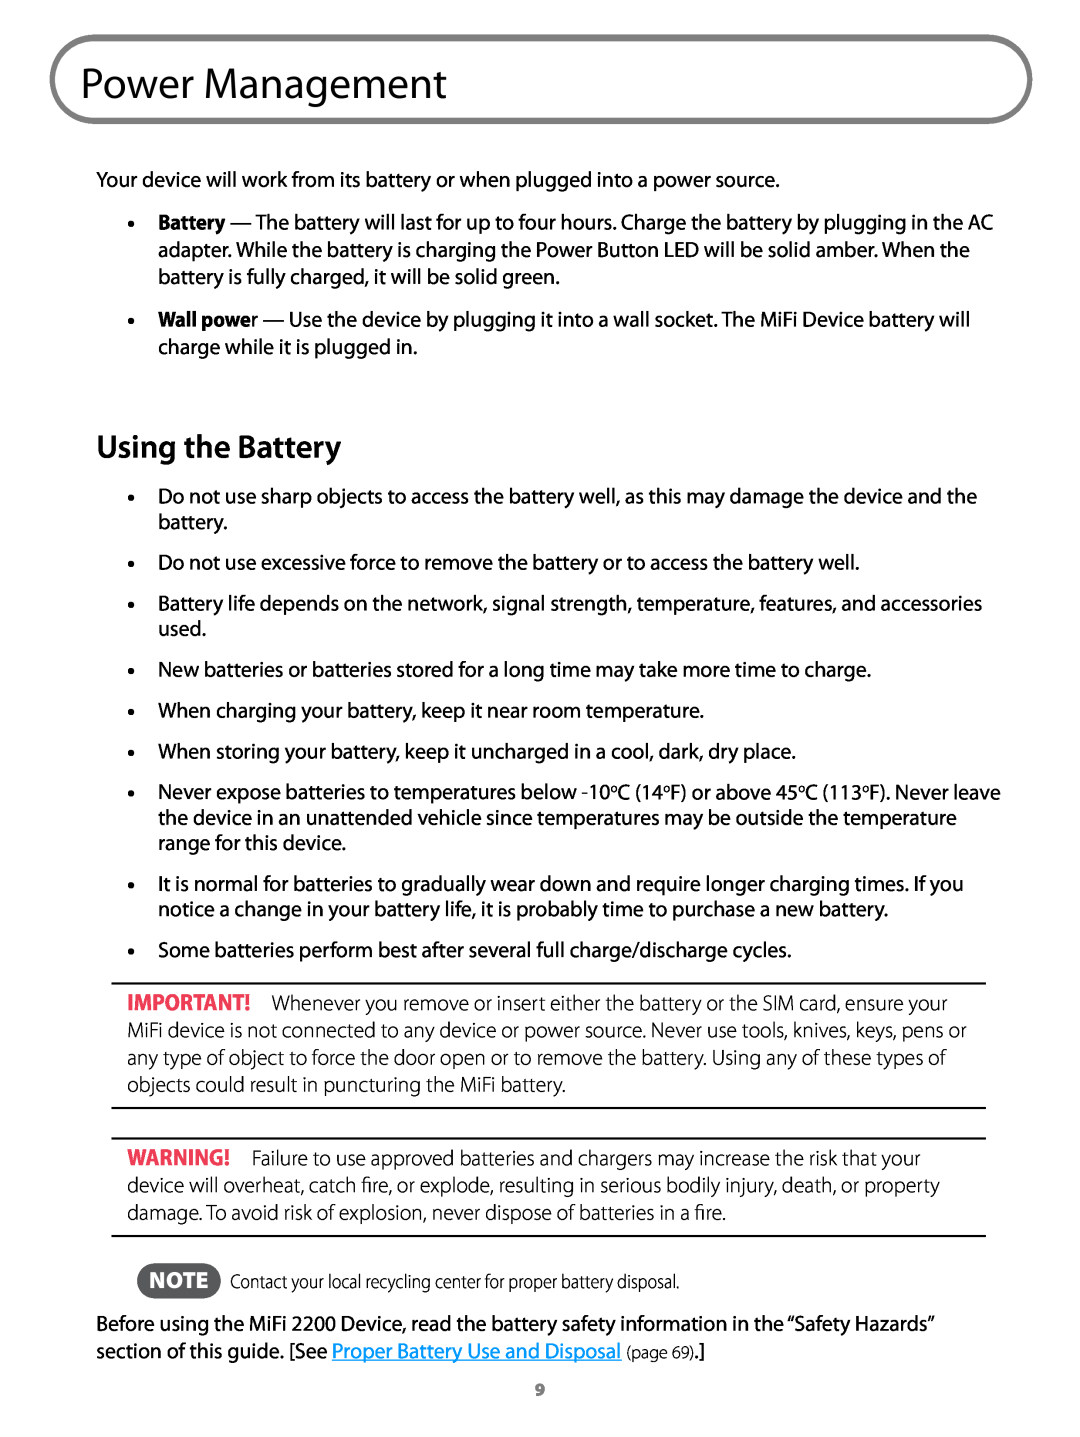 Virgin Mobile 2200 manual Power Management, Using the Battery 